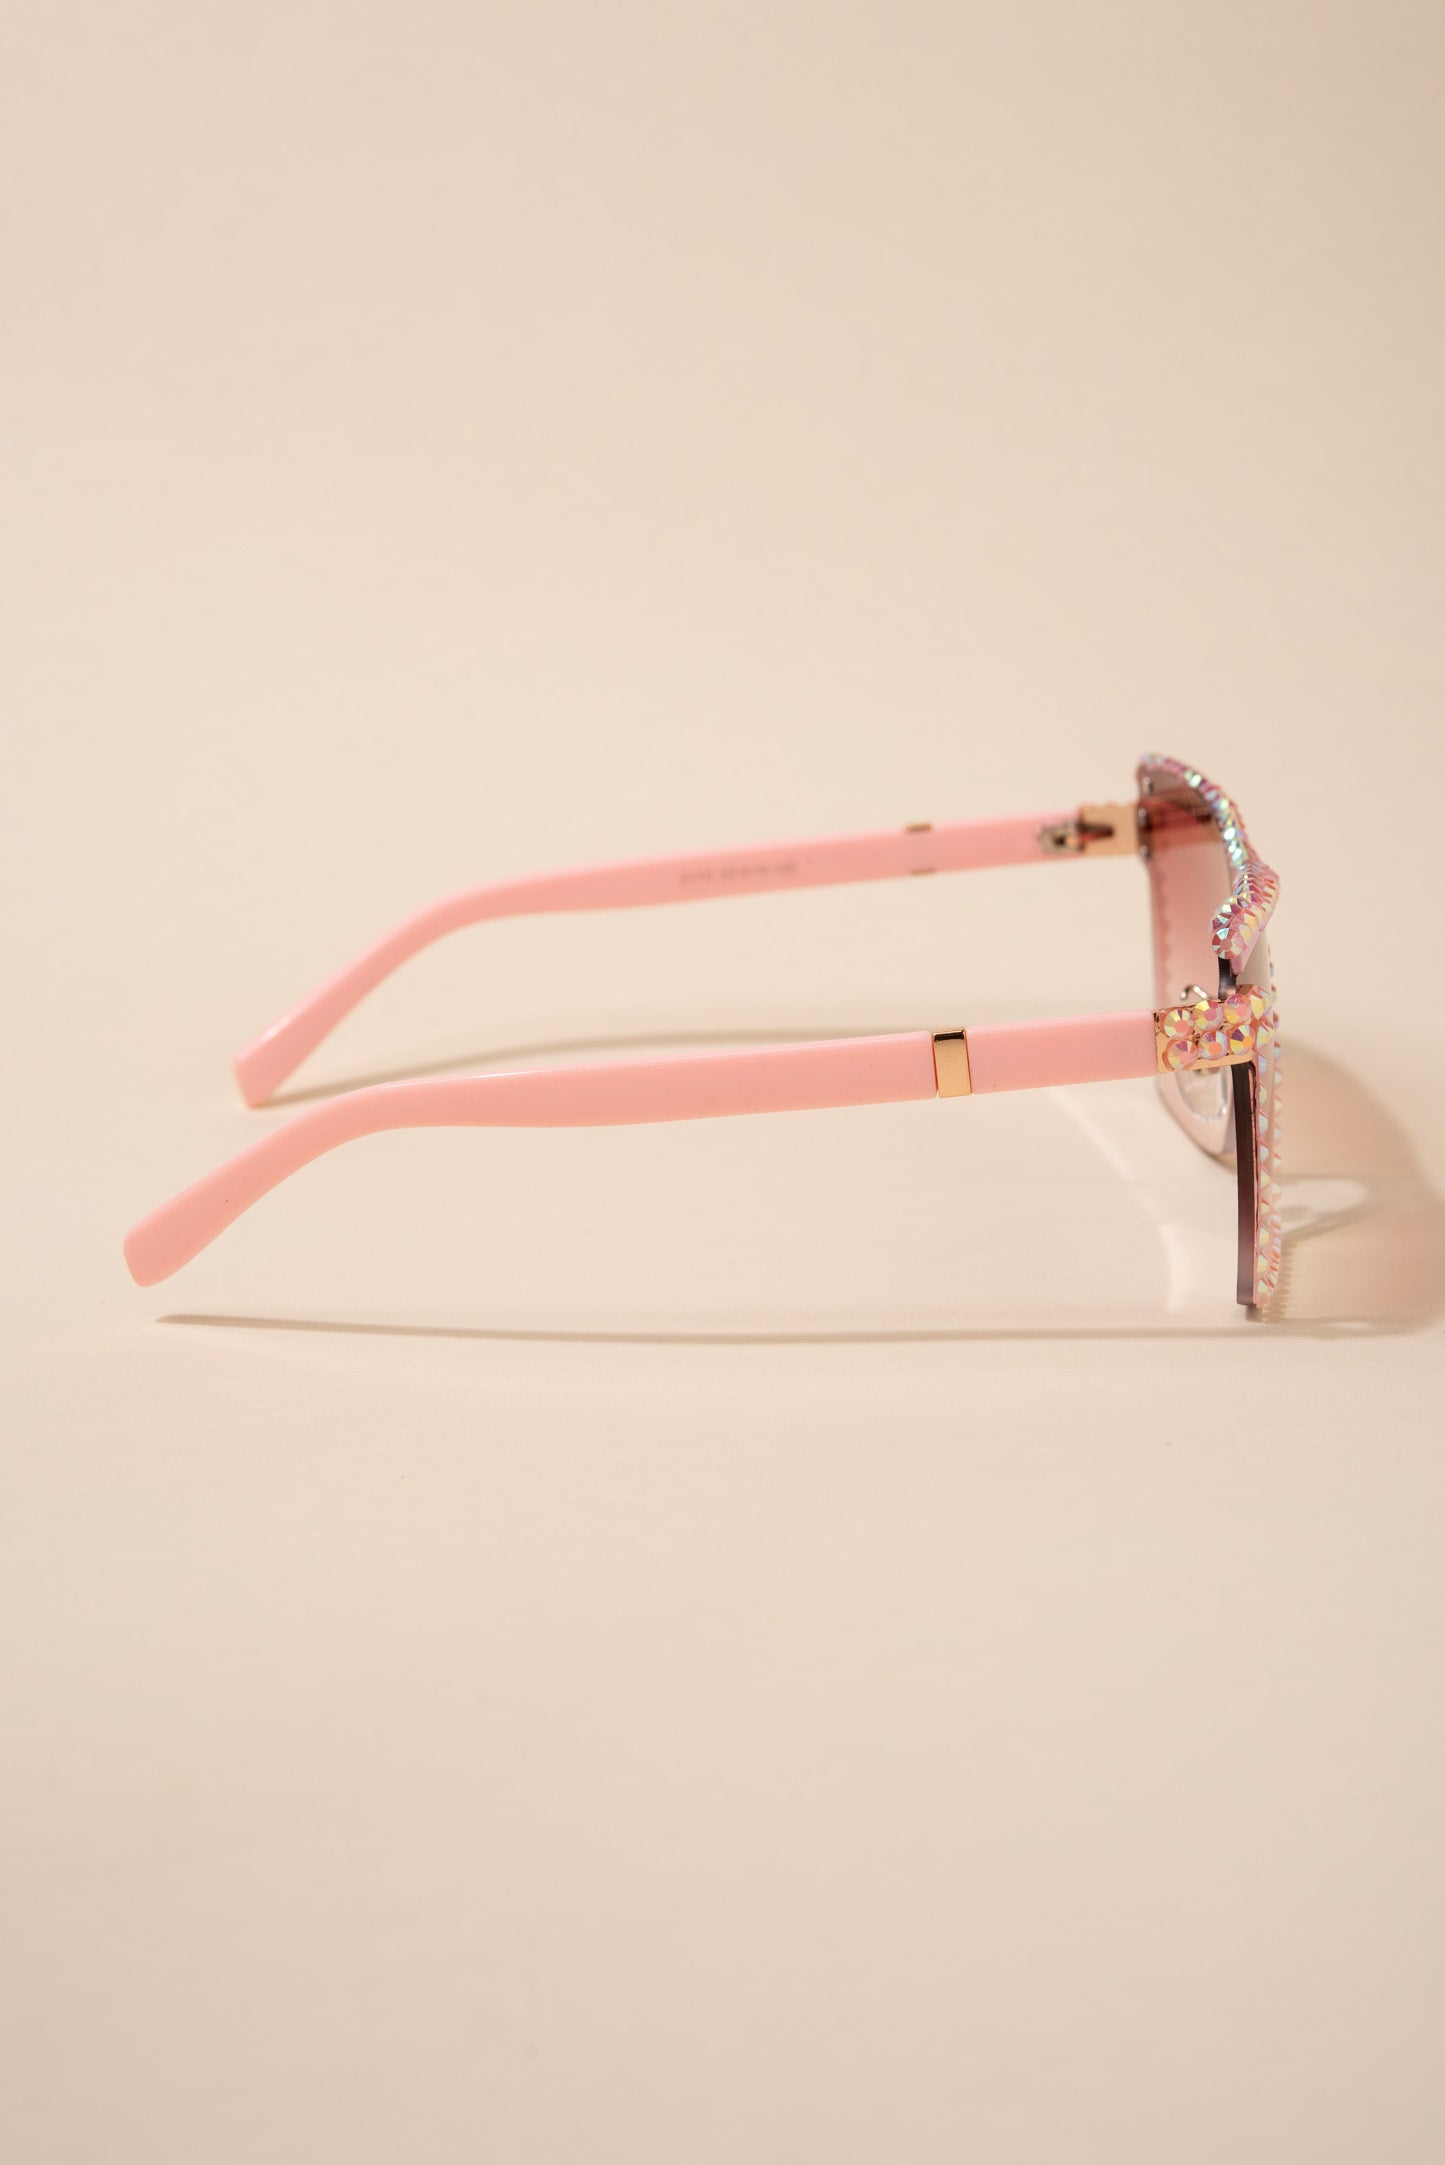 Jordan Futuristic Mono Lens Rhinestone Sunglasses - Pink